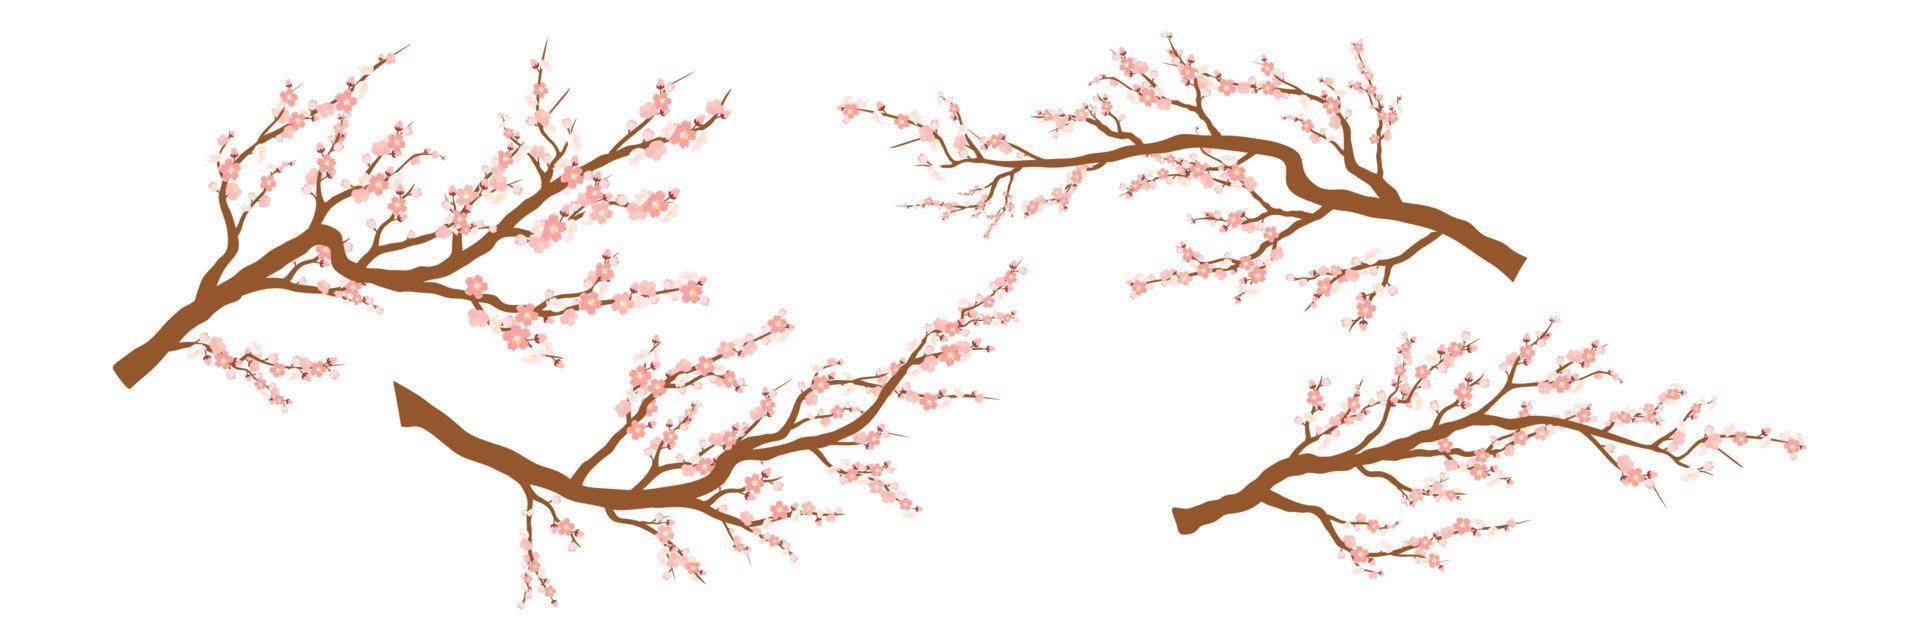 conjunto de ramas de árboles florecientes de primavera, rama de árbol con flores rosas. sakura o cereza vector